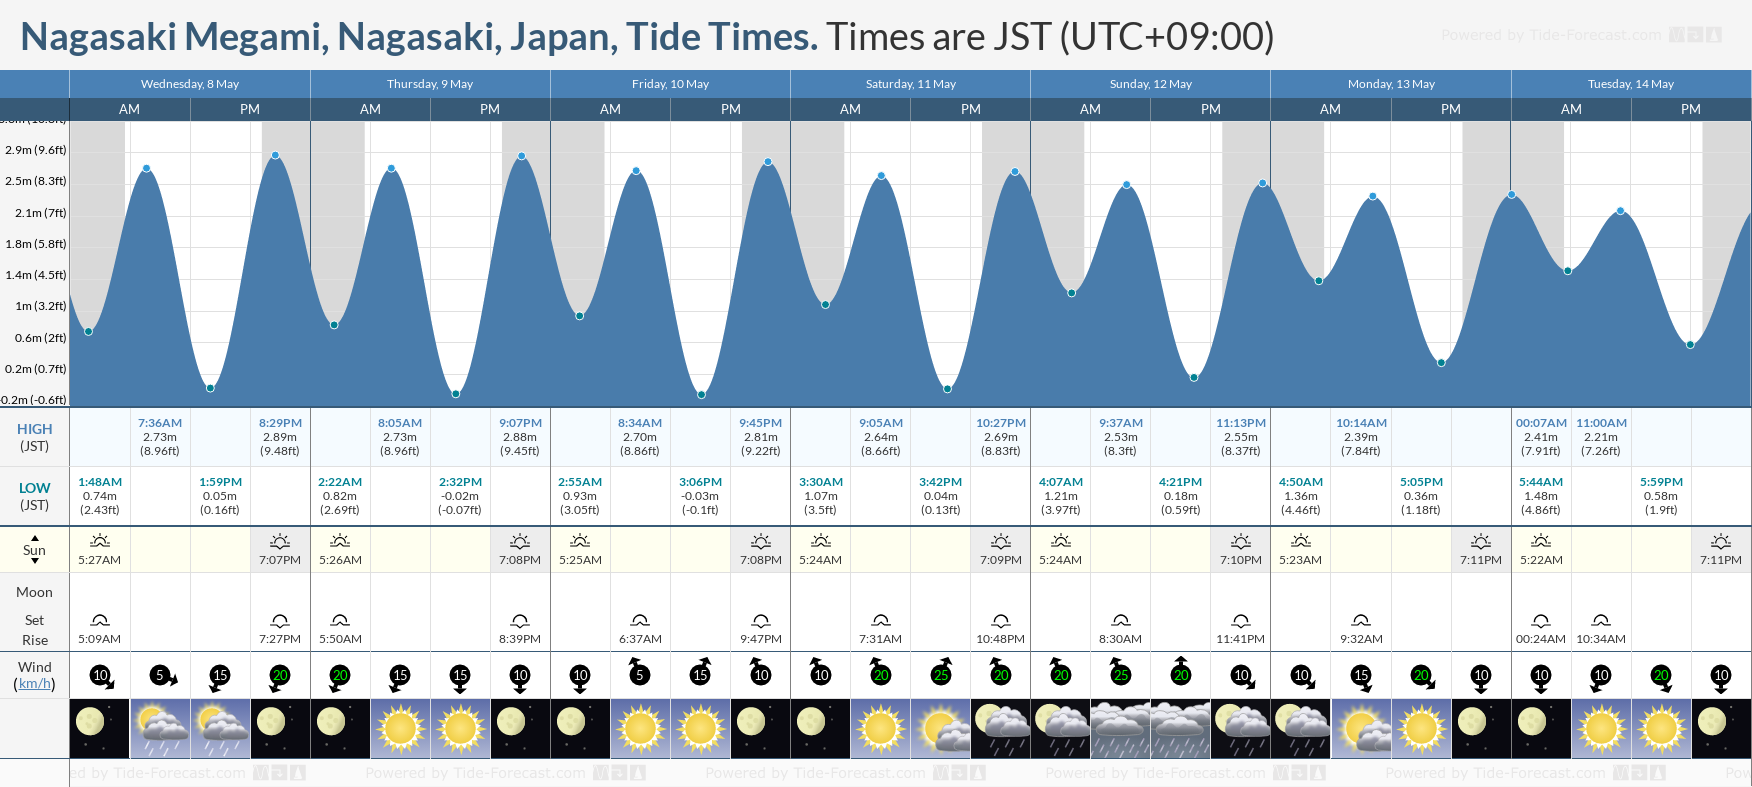 Nagasaki Megami, Nagasaki, Japan Tide Chart including high and low tide tide times for the next 7 days